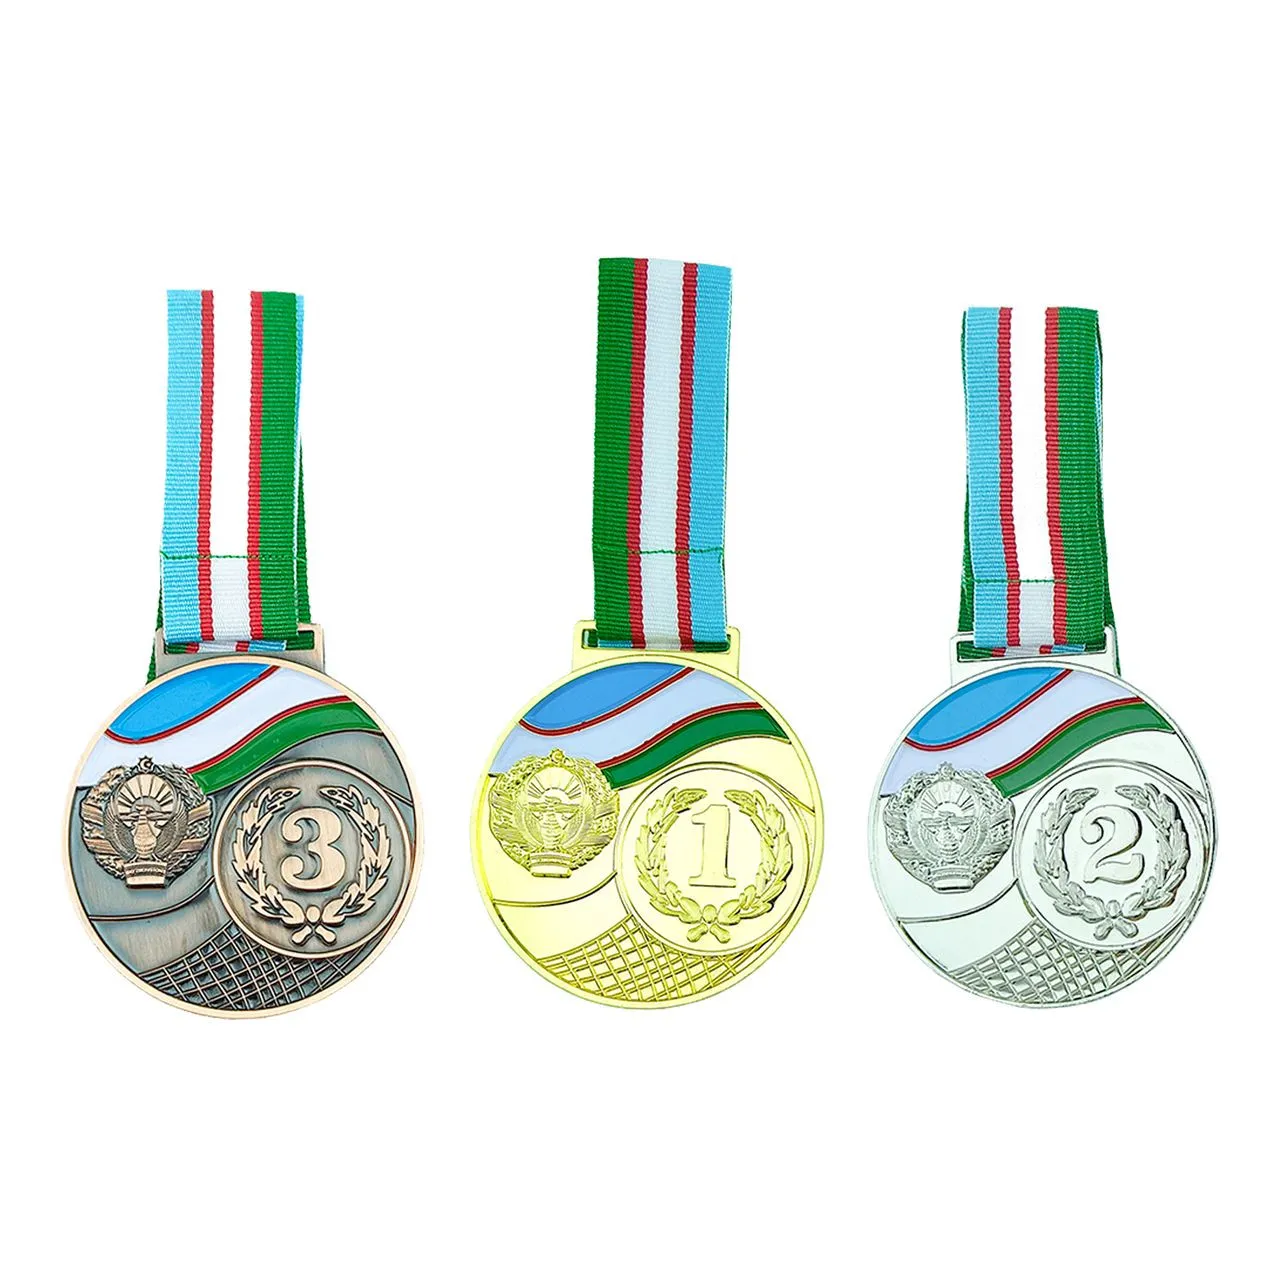 O'ZBEKISTON medali gerbli, bronza#2